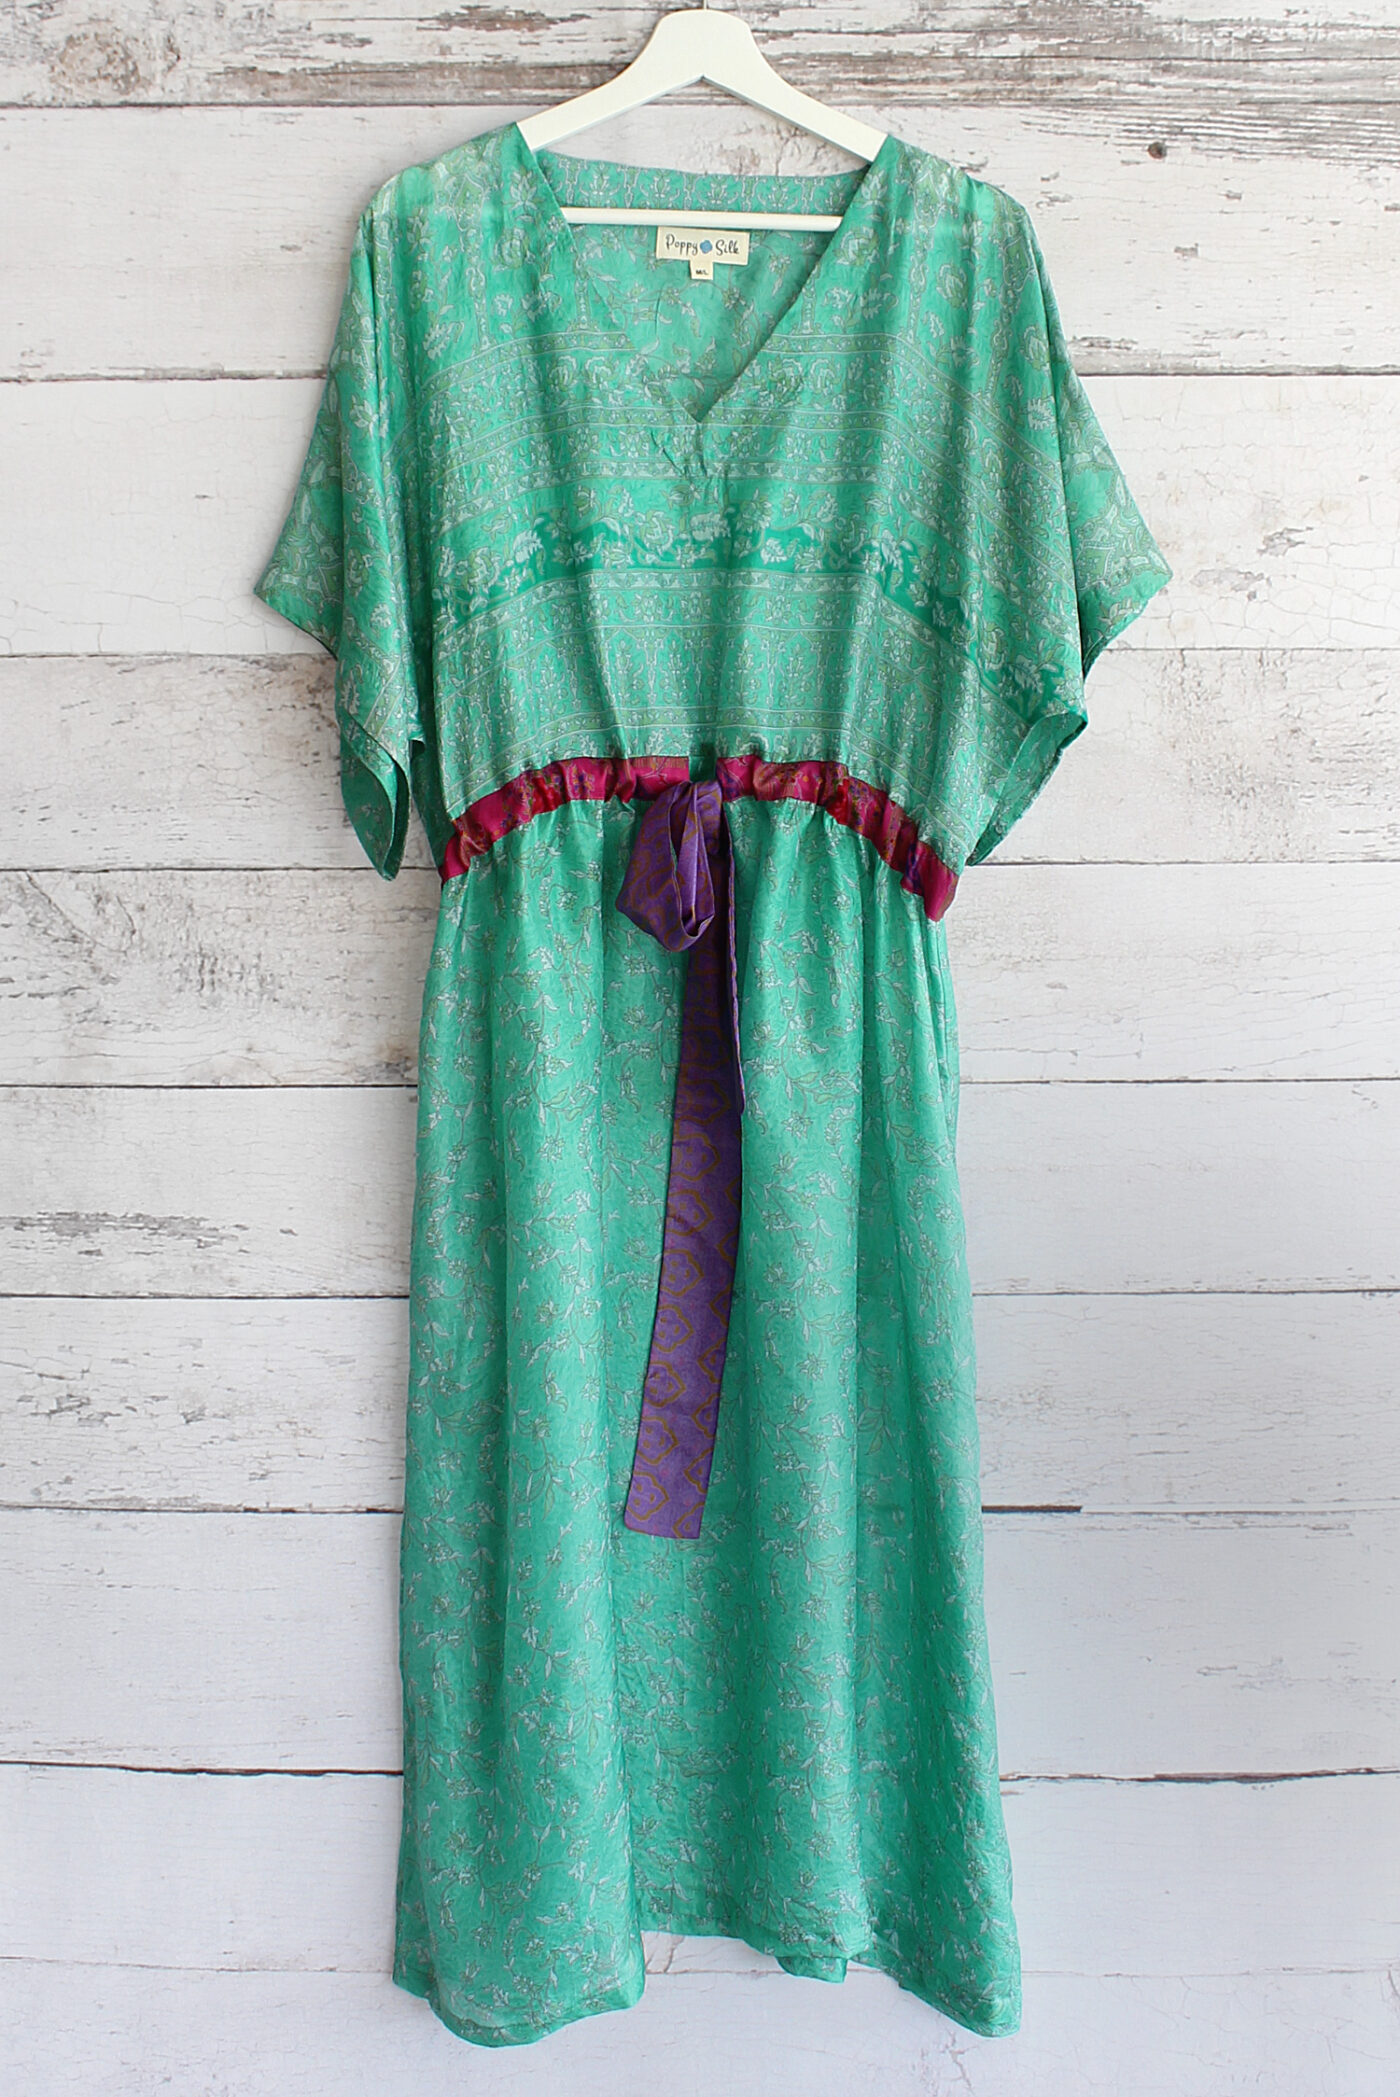 Jacinda Recycled Silk Sari Print Dress J36